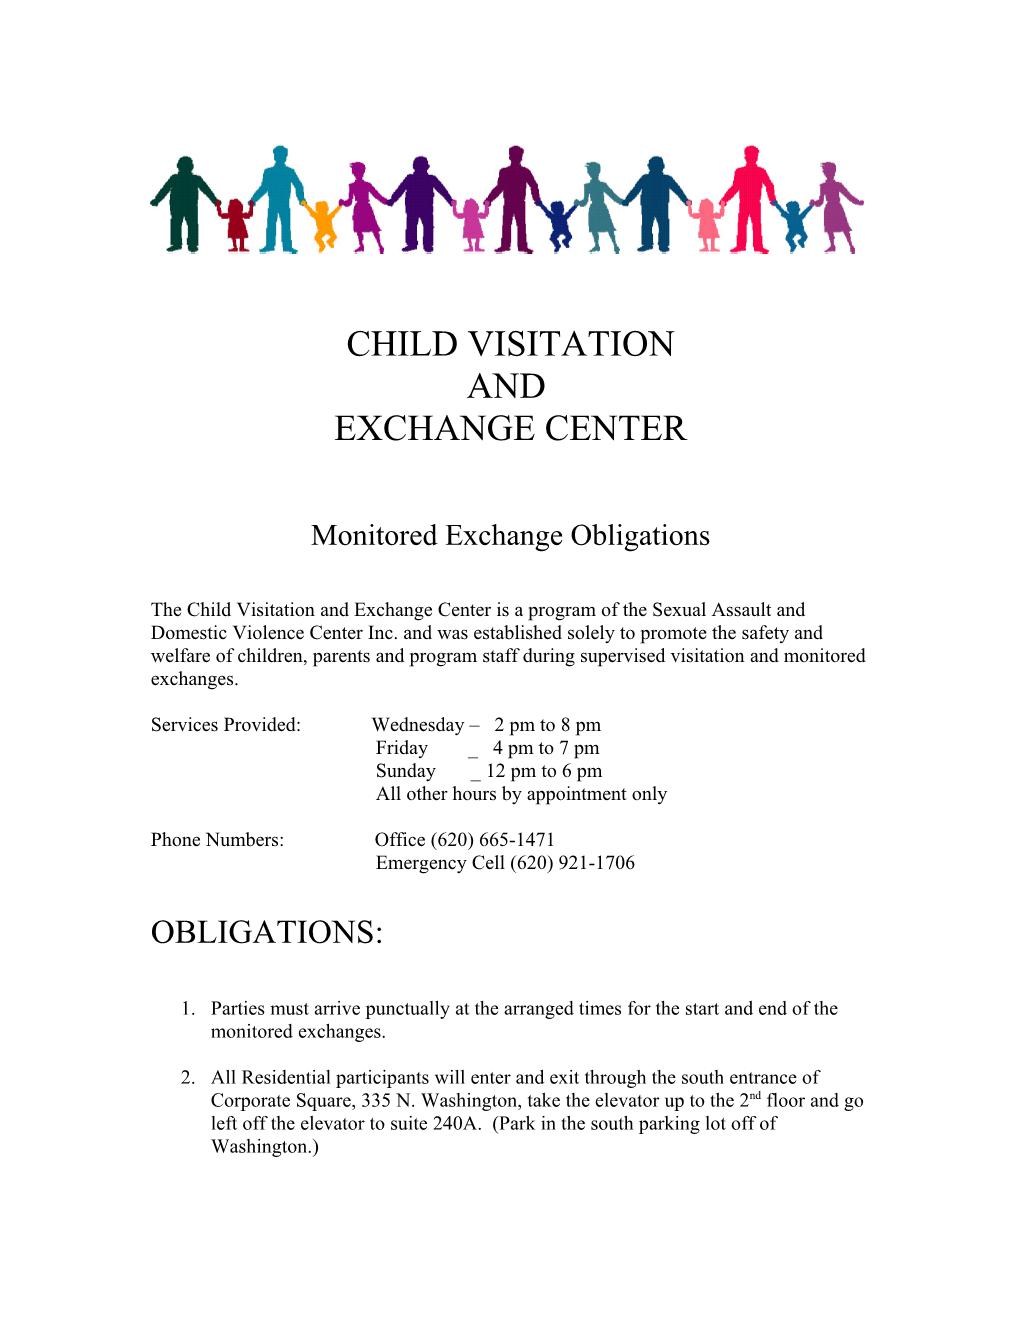 Child Visitation